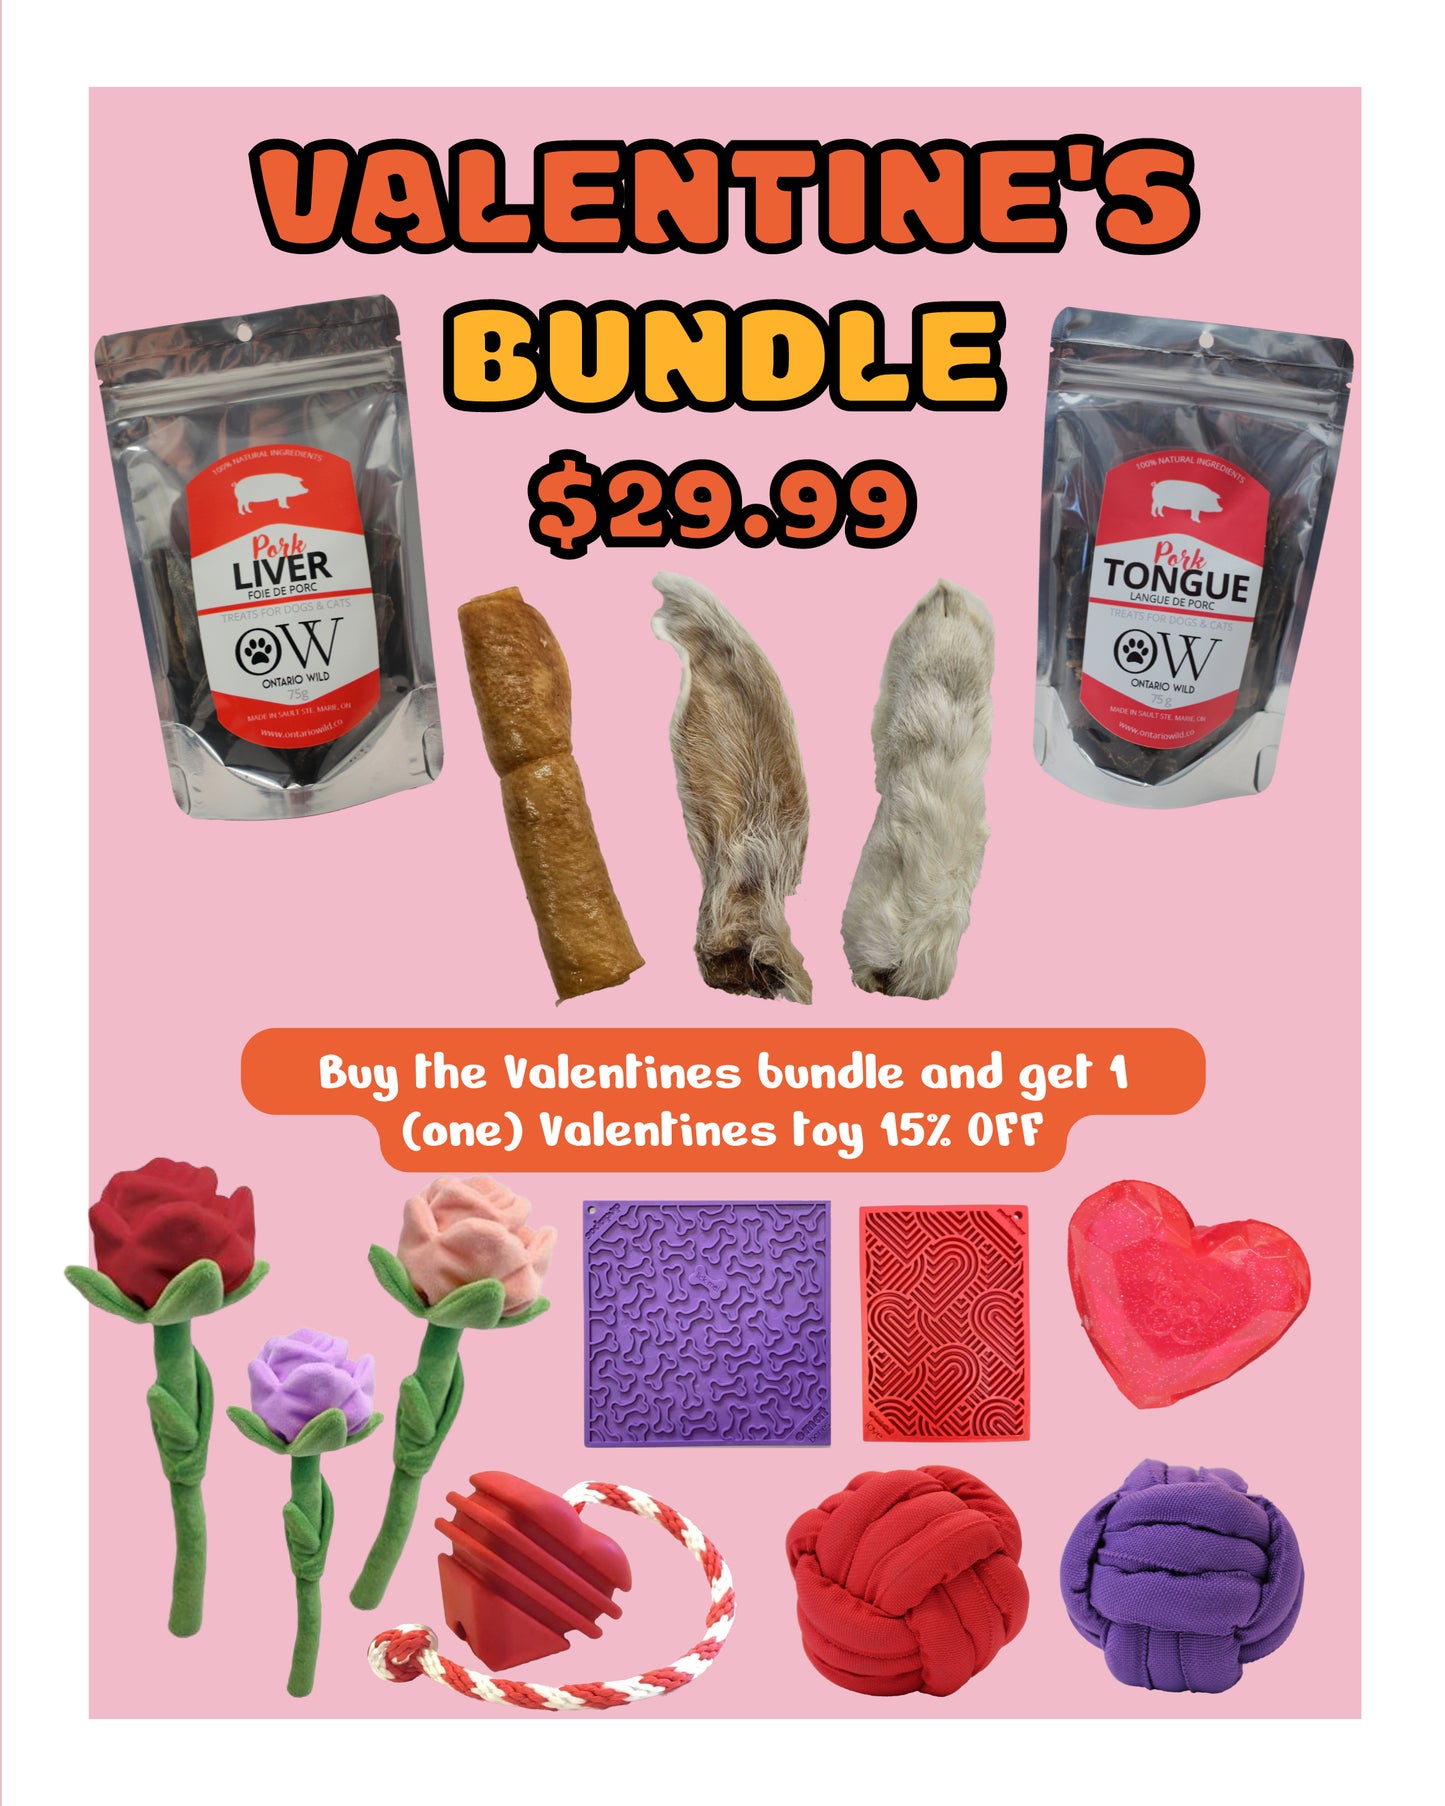 A Valentines Bundle